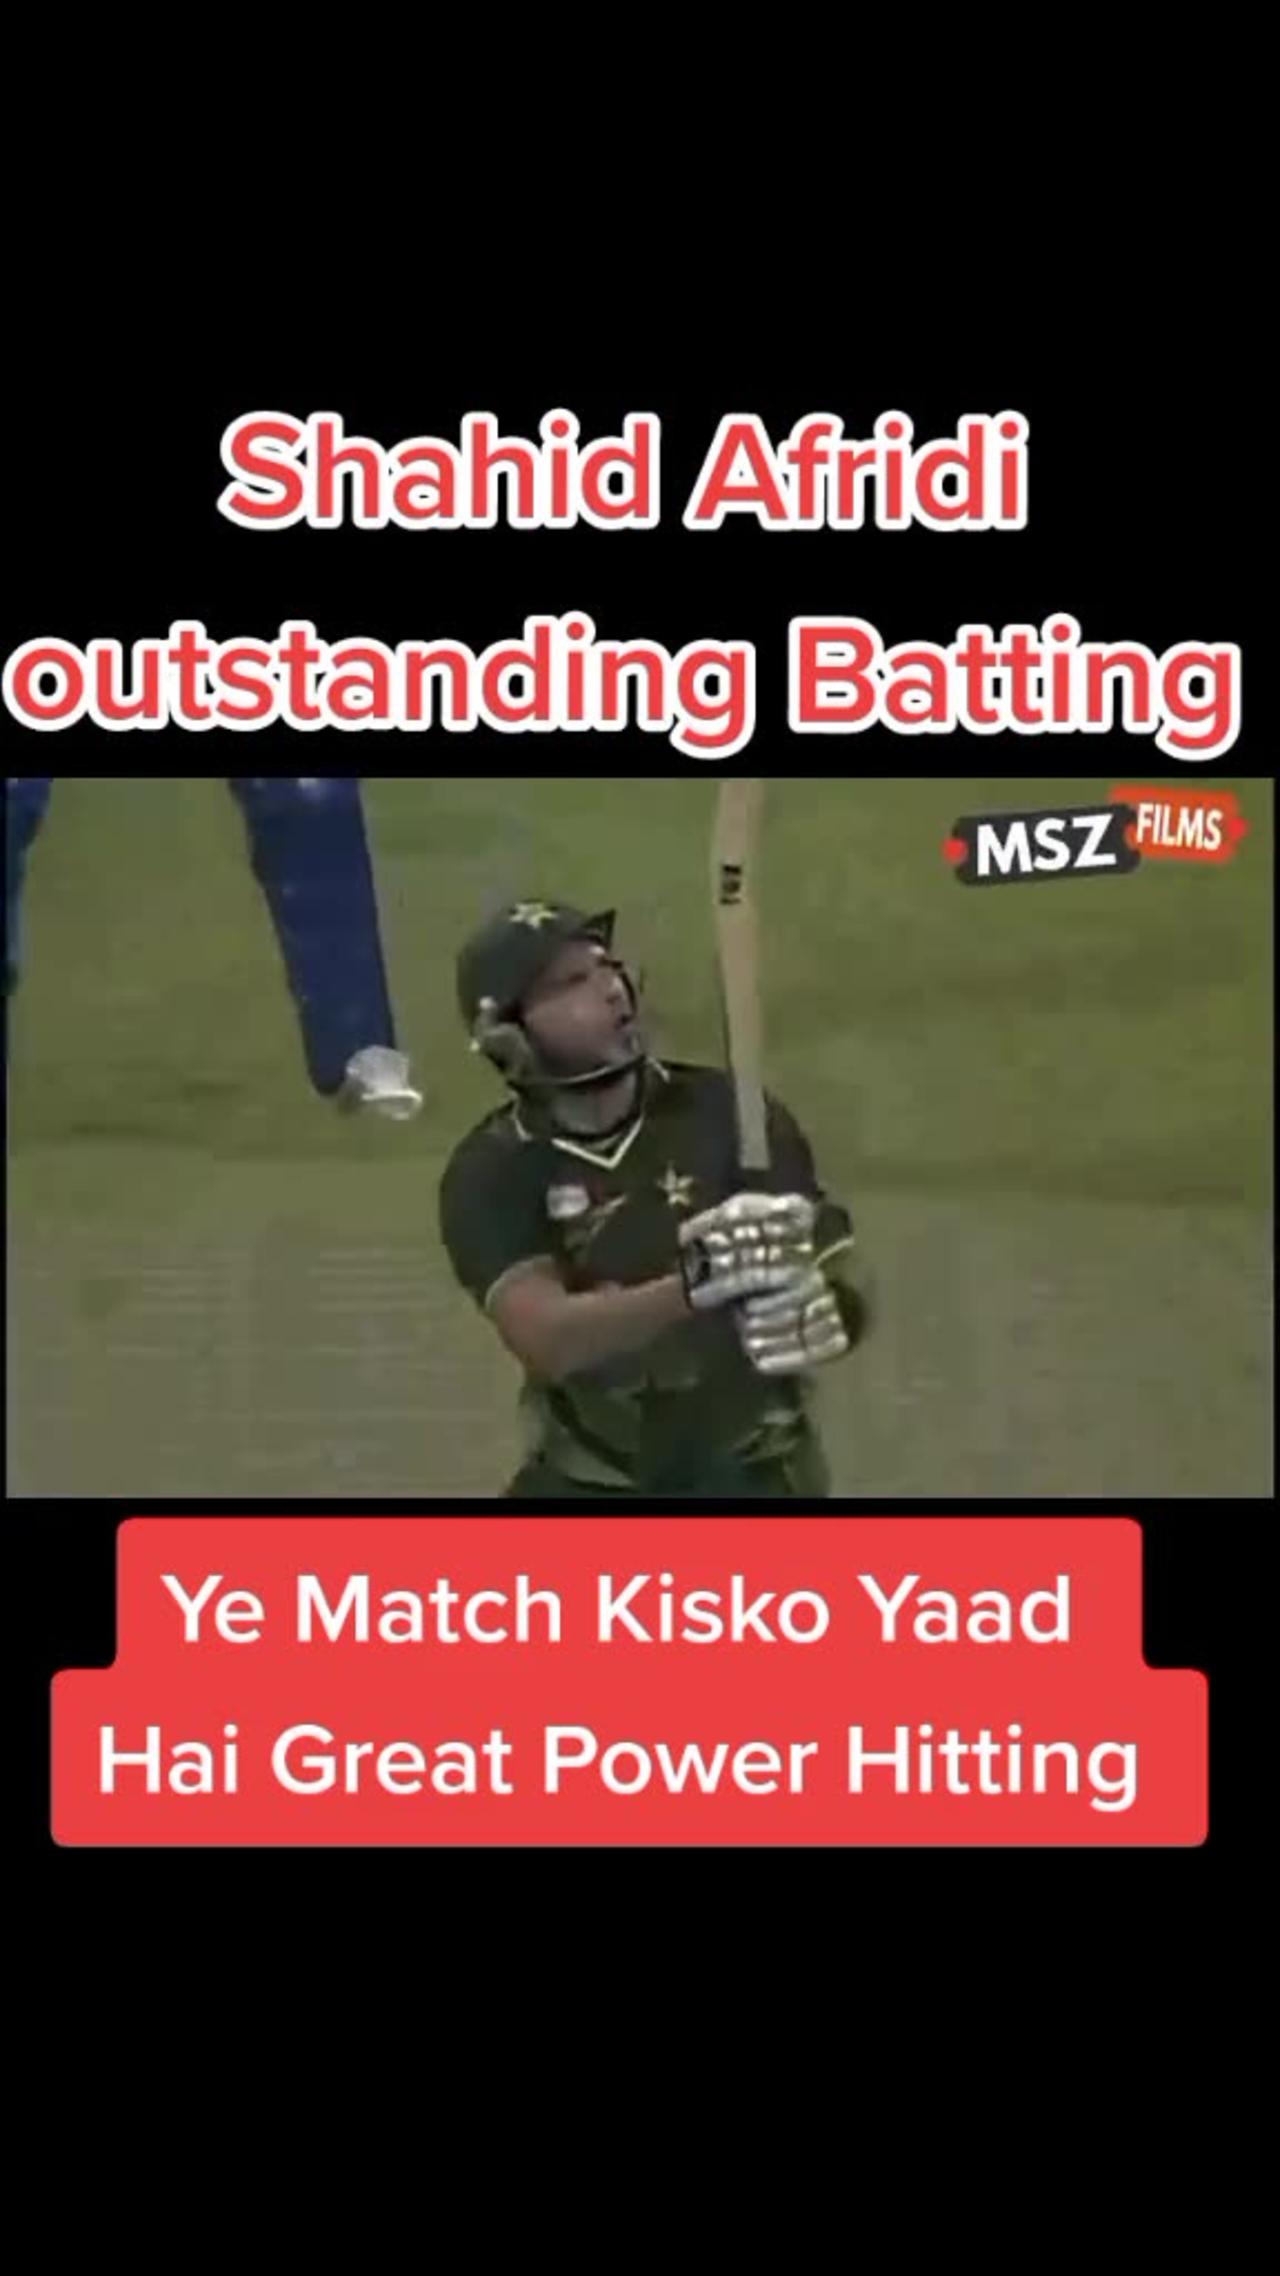 Shahid Afridi best batting against sri lanka